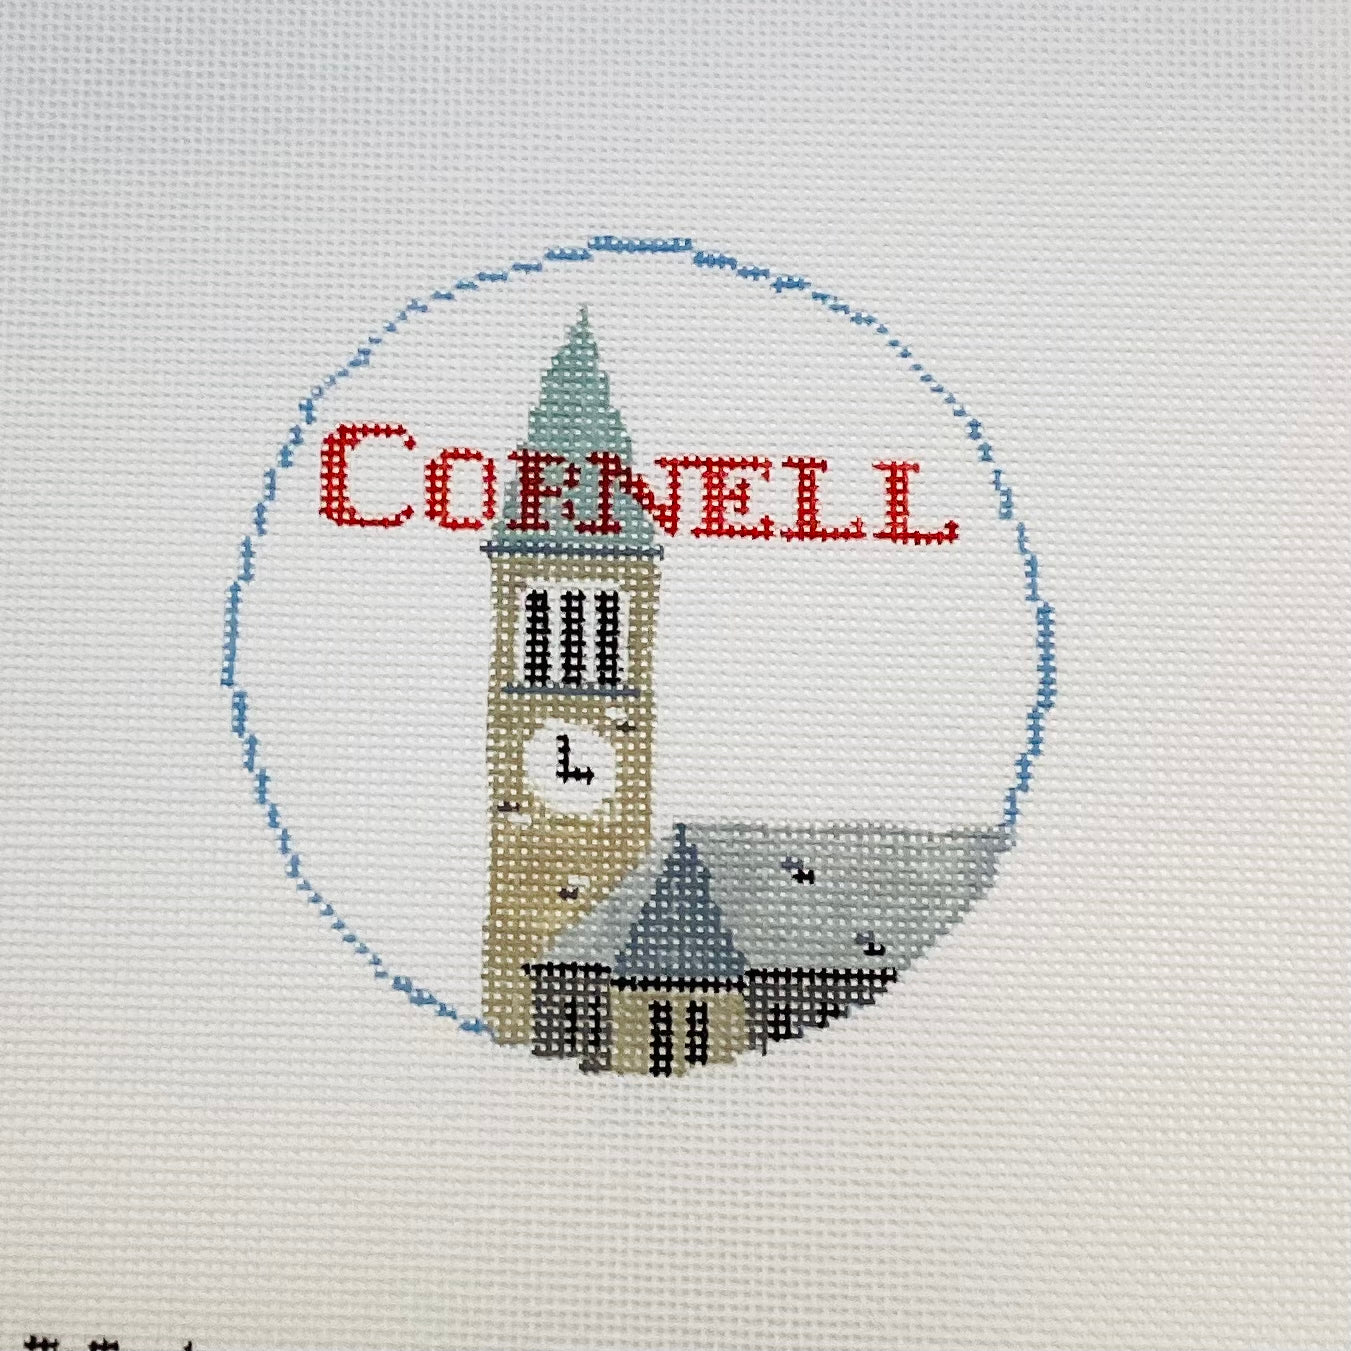 Cornell U, Clock Tower